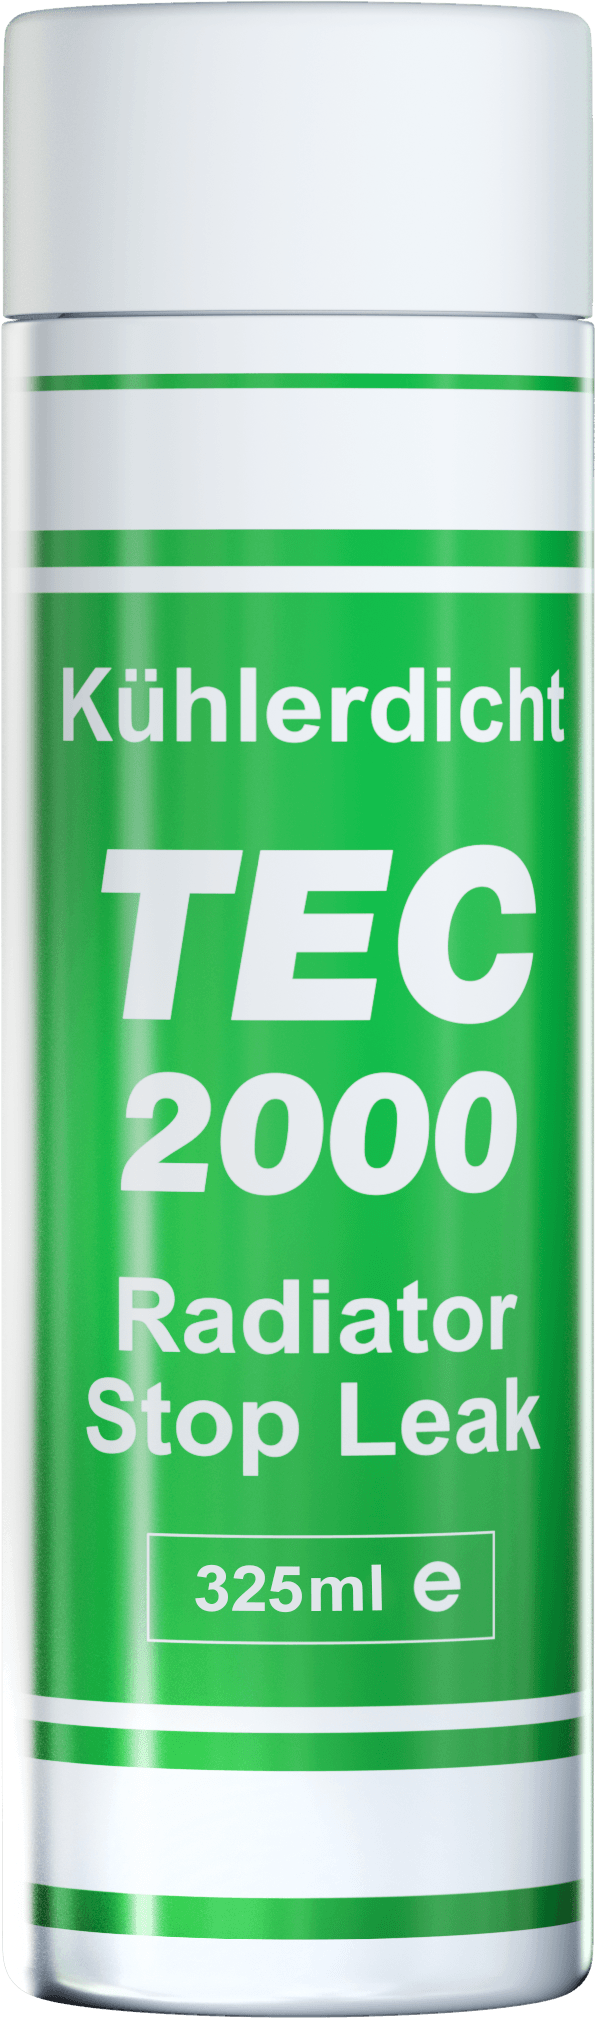 TEC 2000 Radiator Stop Leak product